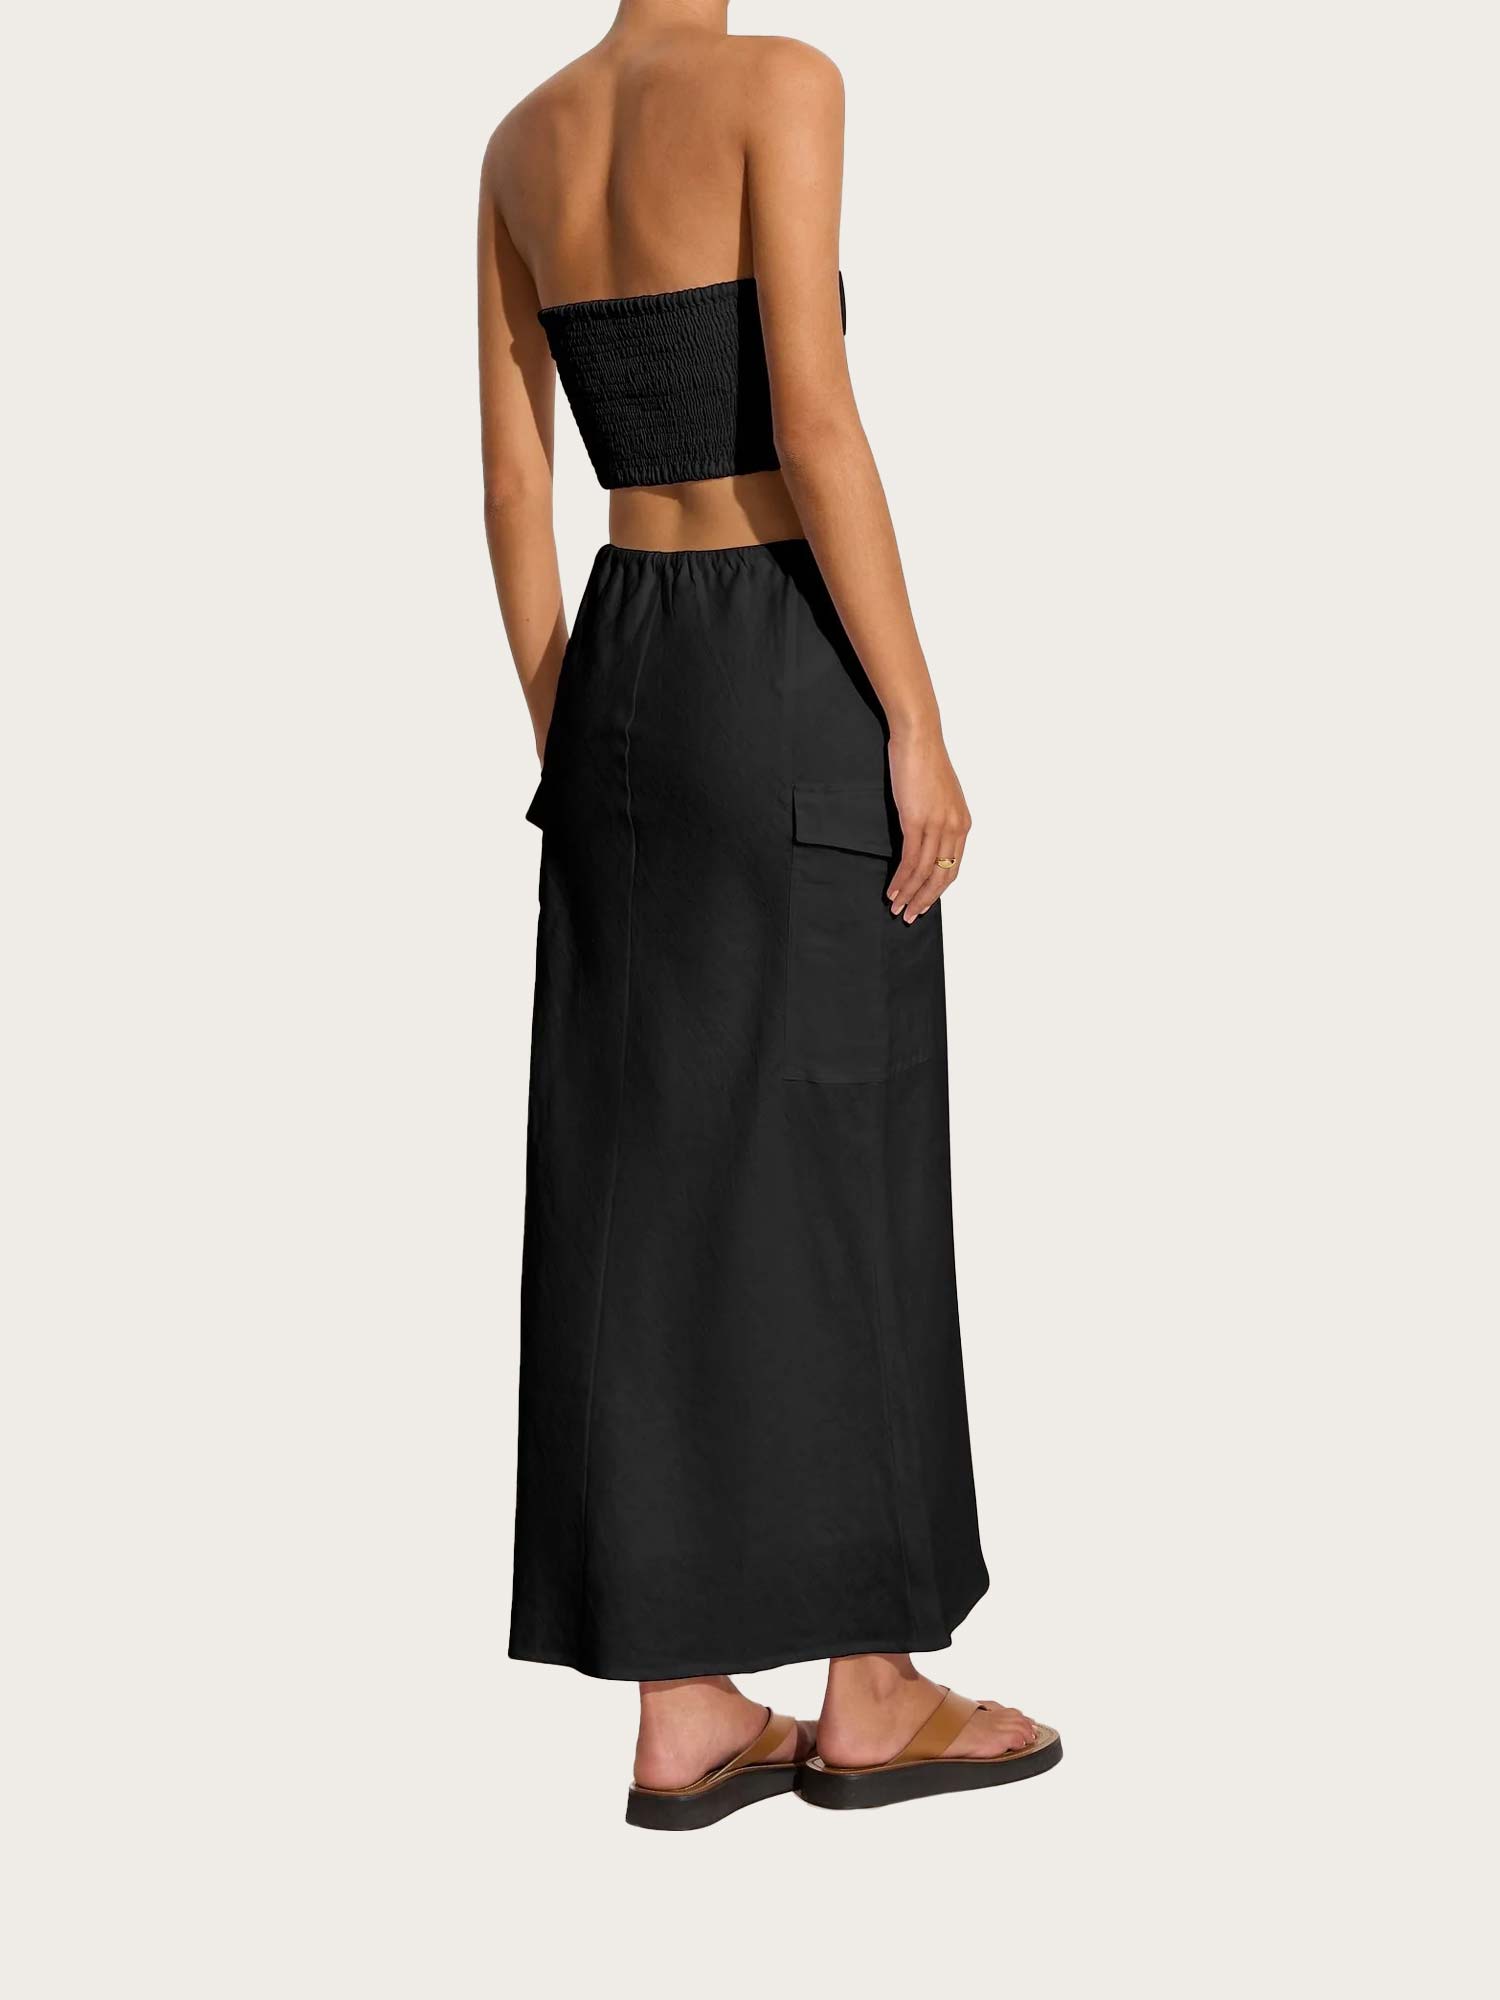 Katala Skirt - Black